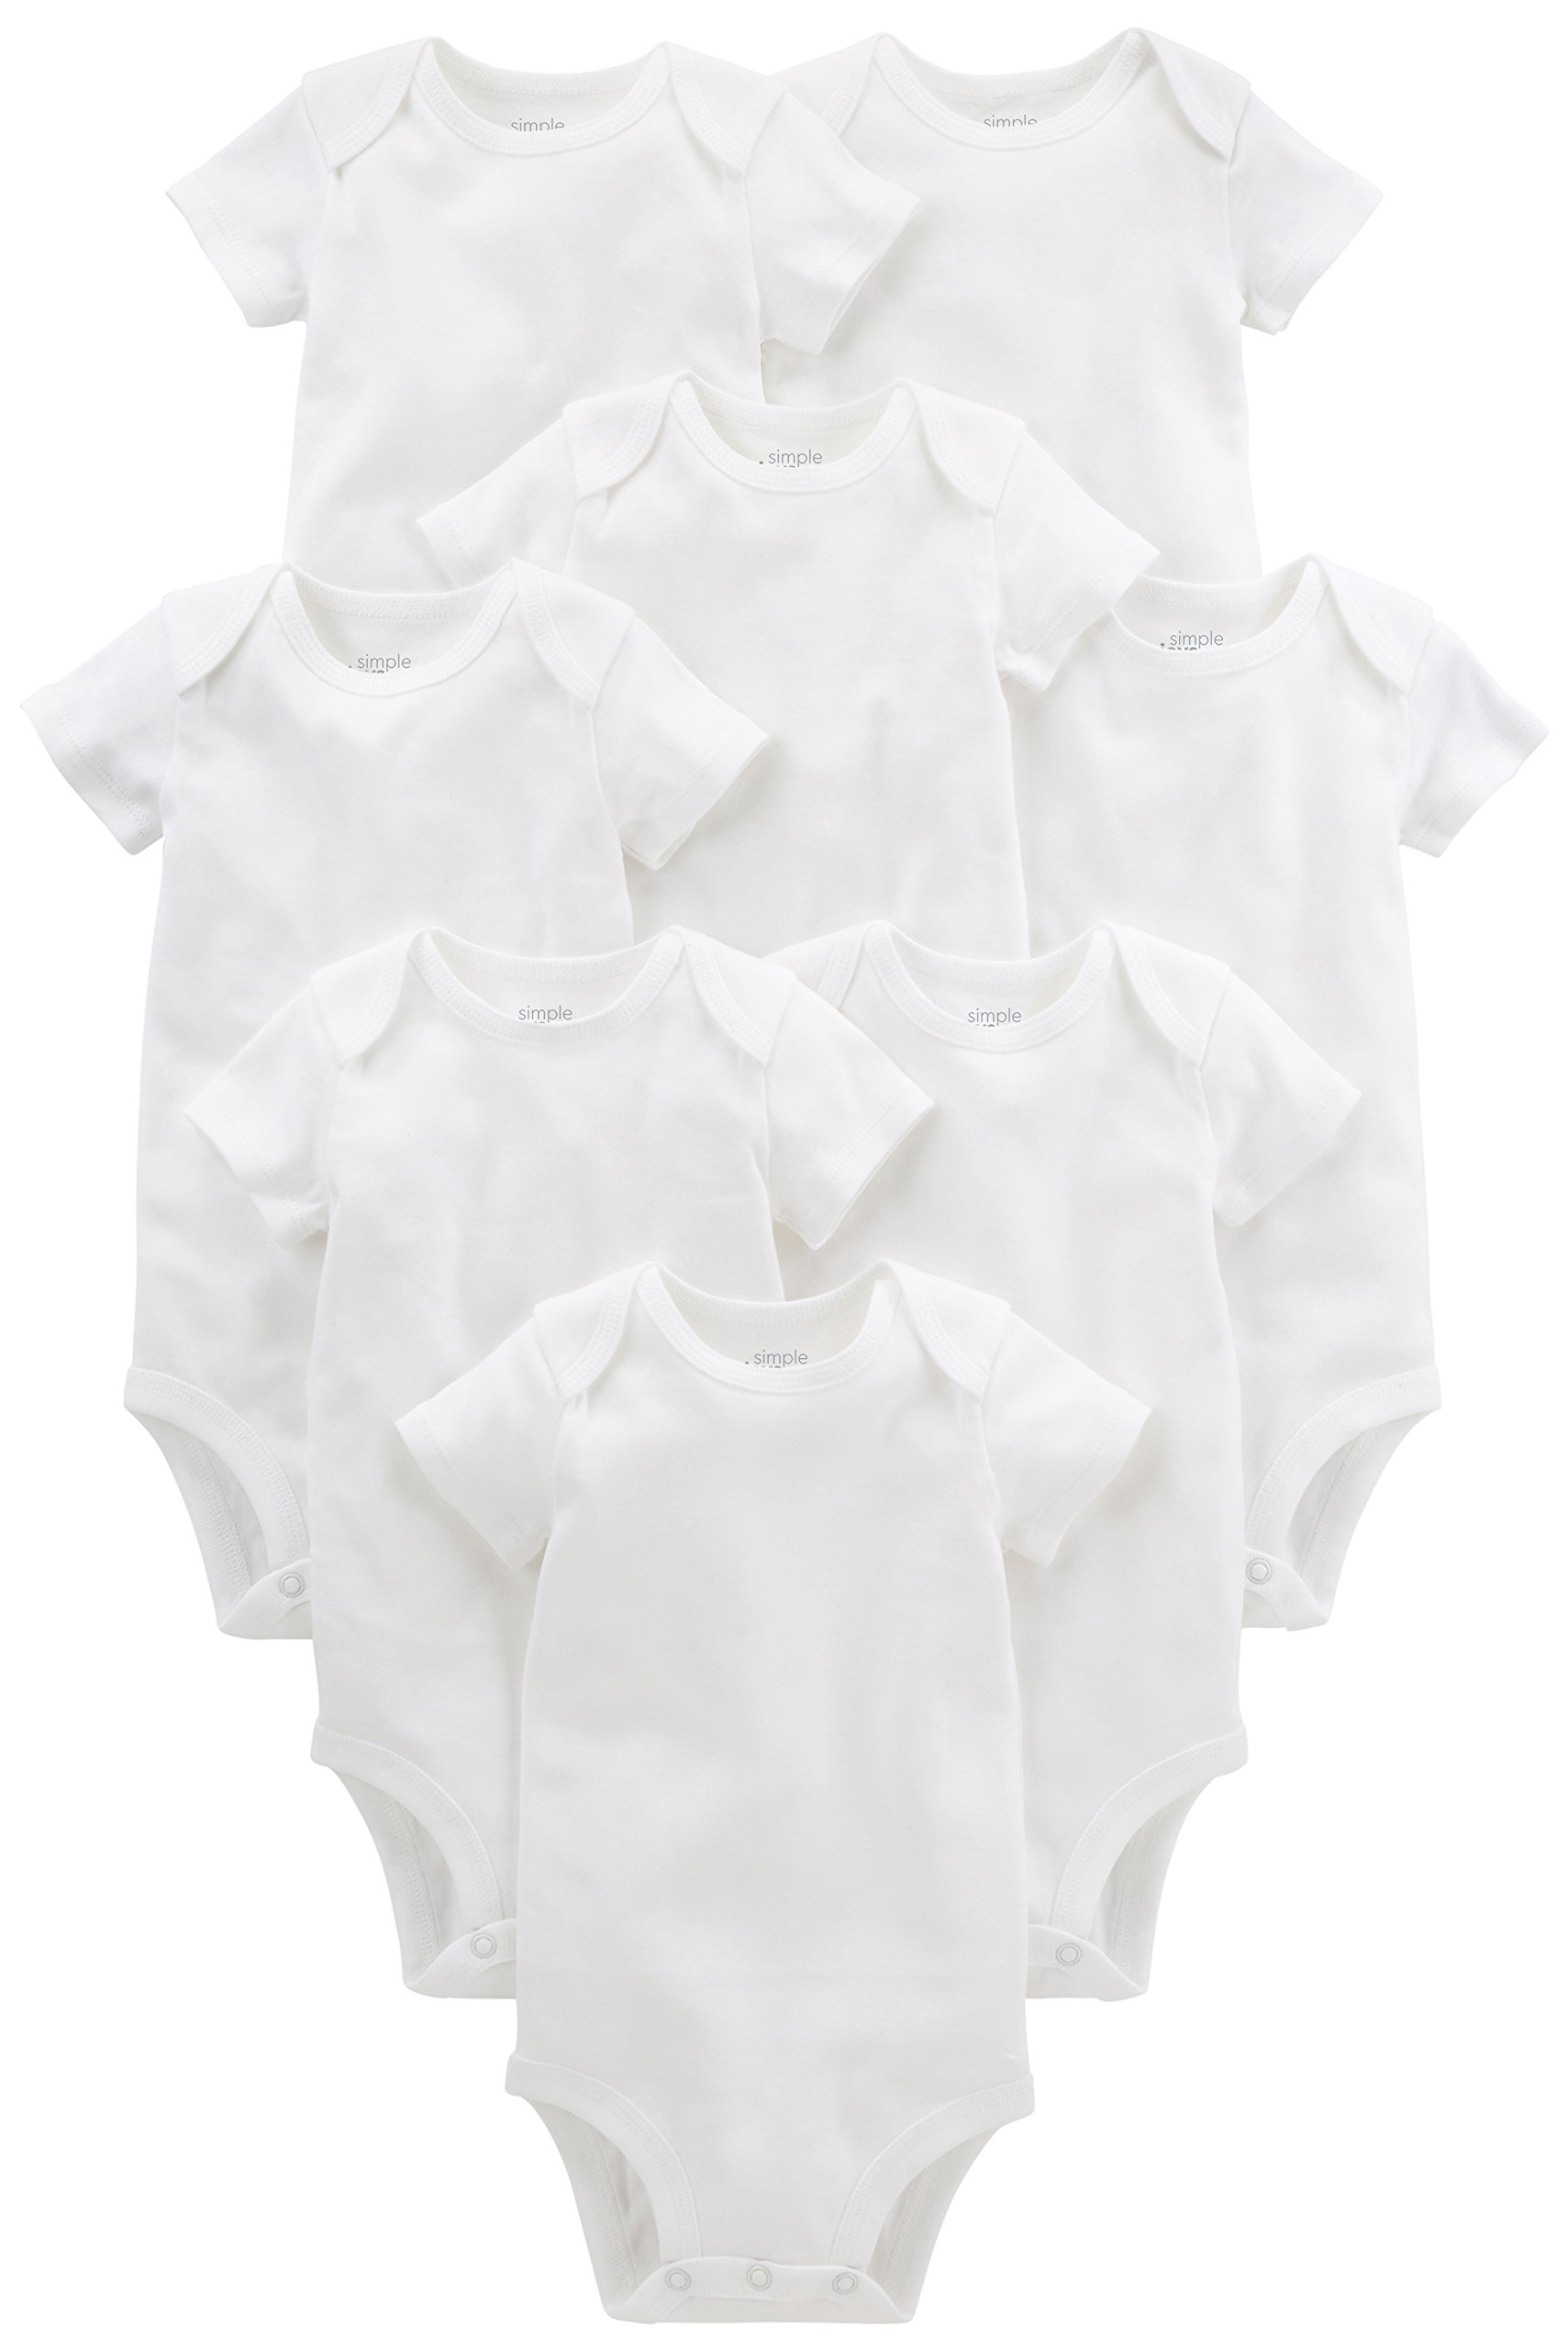 Simple Joys by Carter's Unisex Babies' Short-Sleeve Bodysuit, Multipacks